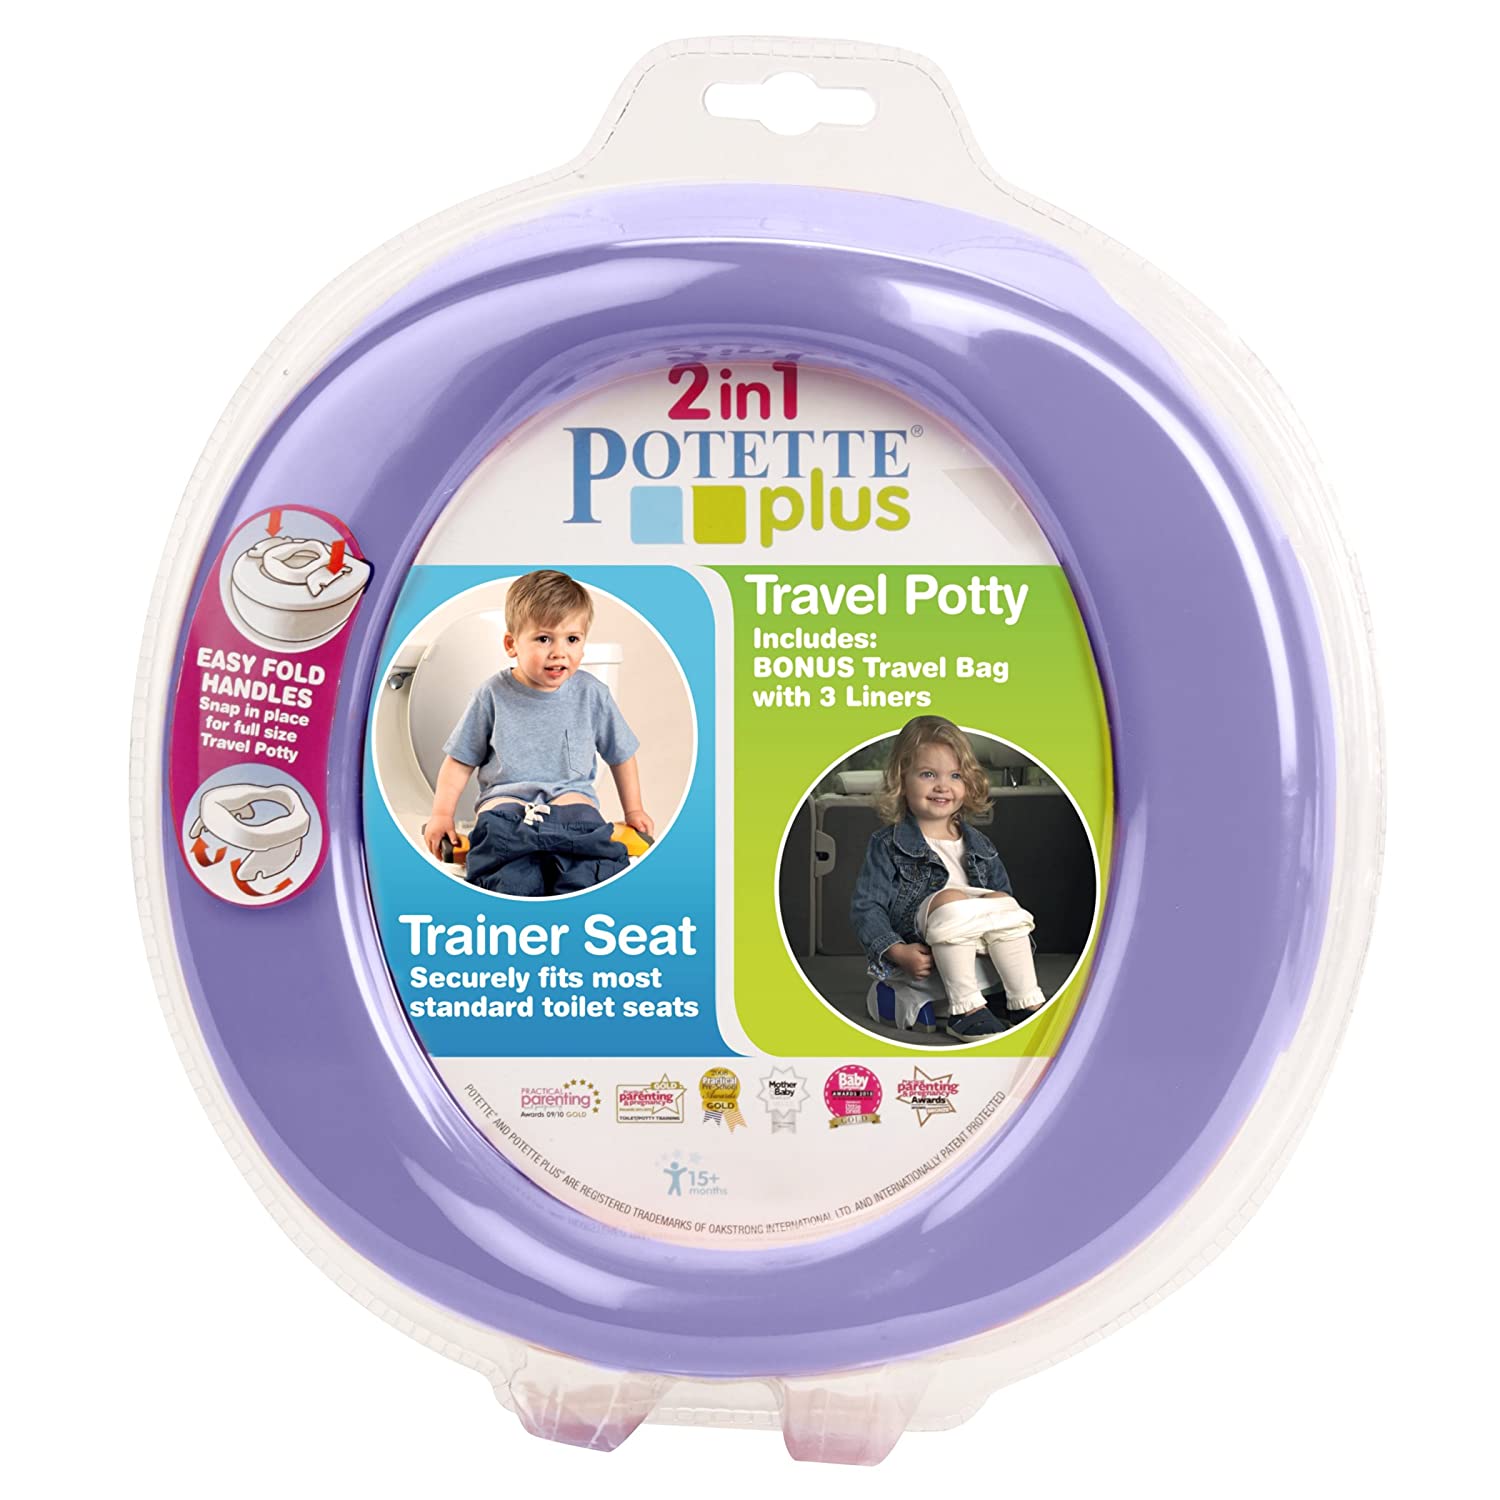 Kalencom Potette Plus 2-in-1 Travel Potty Trainer Seat Lilac